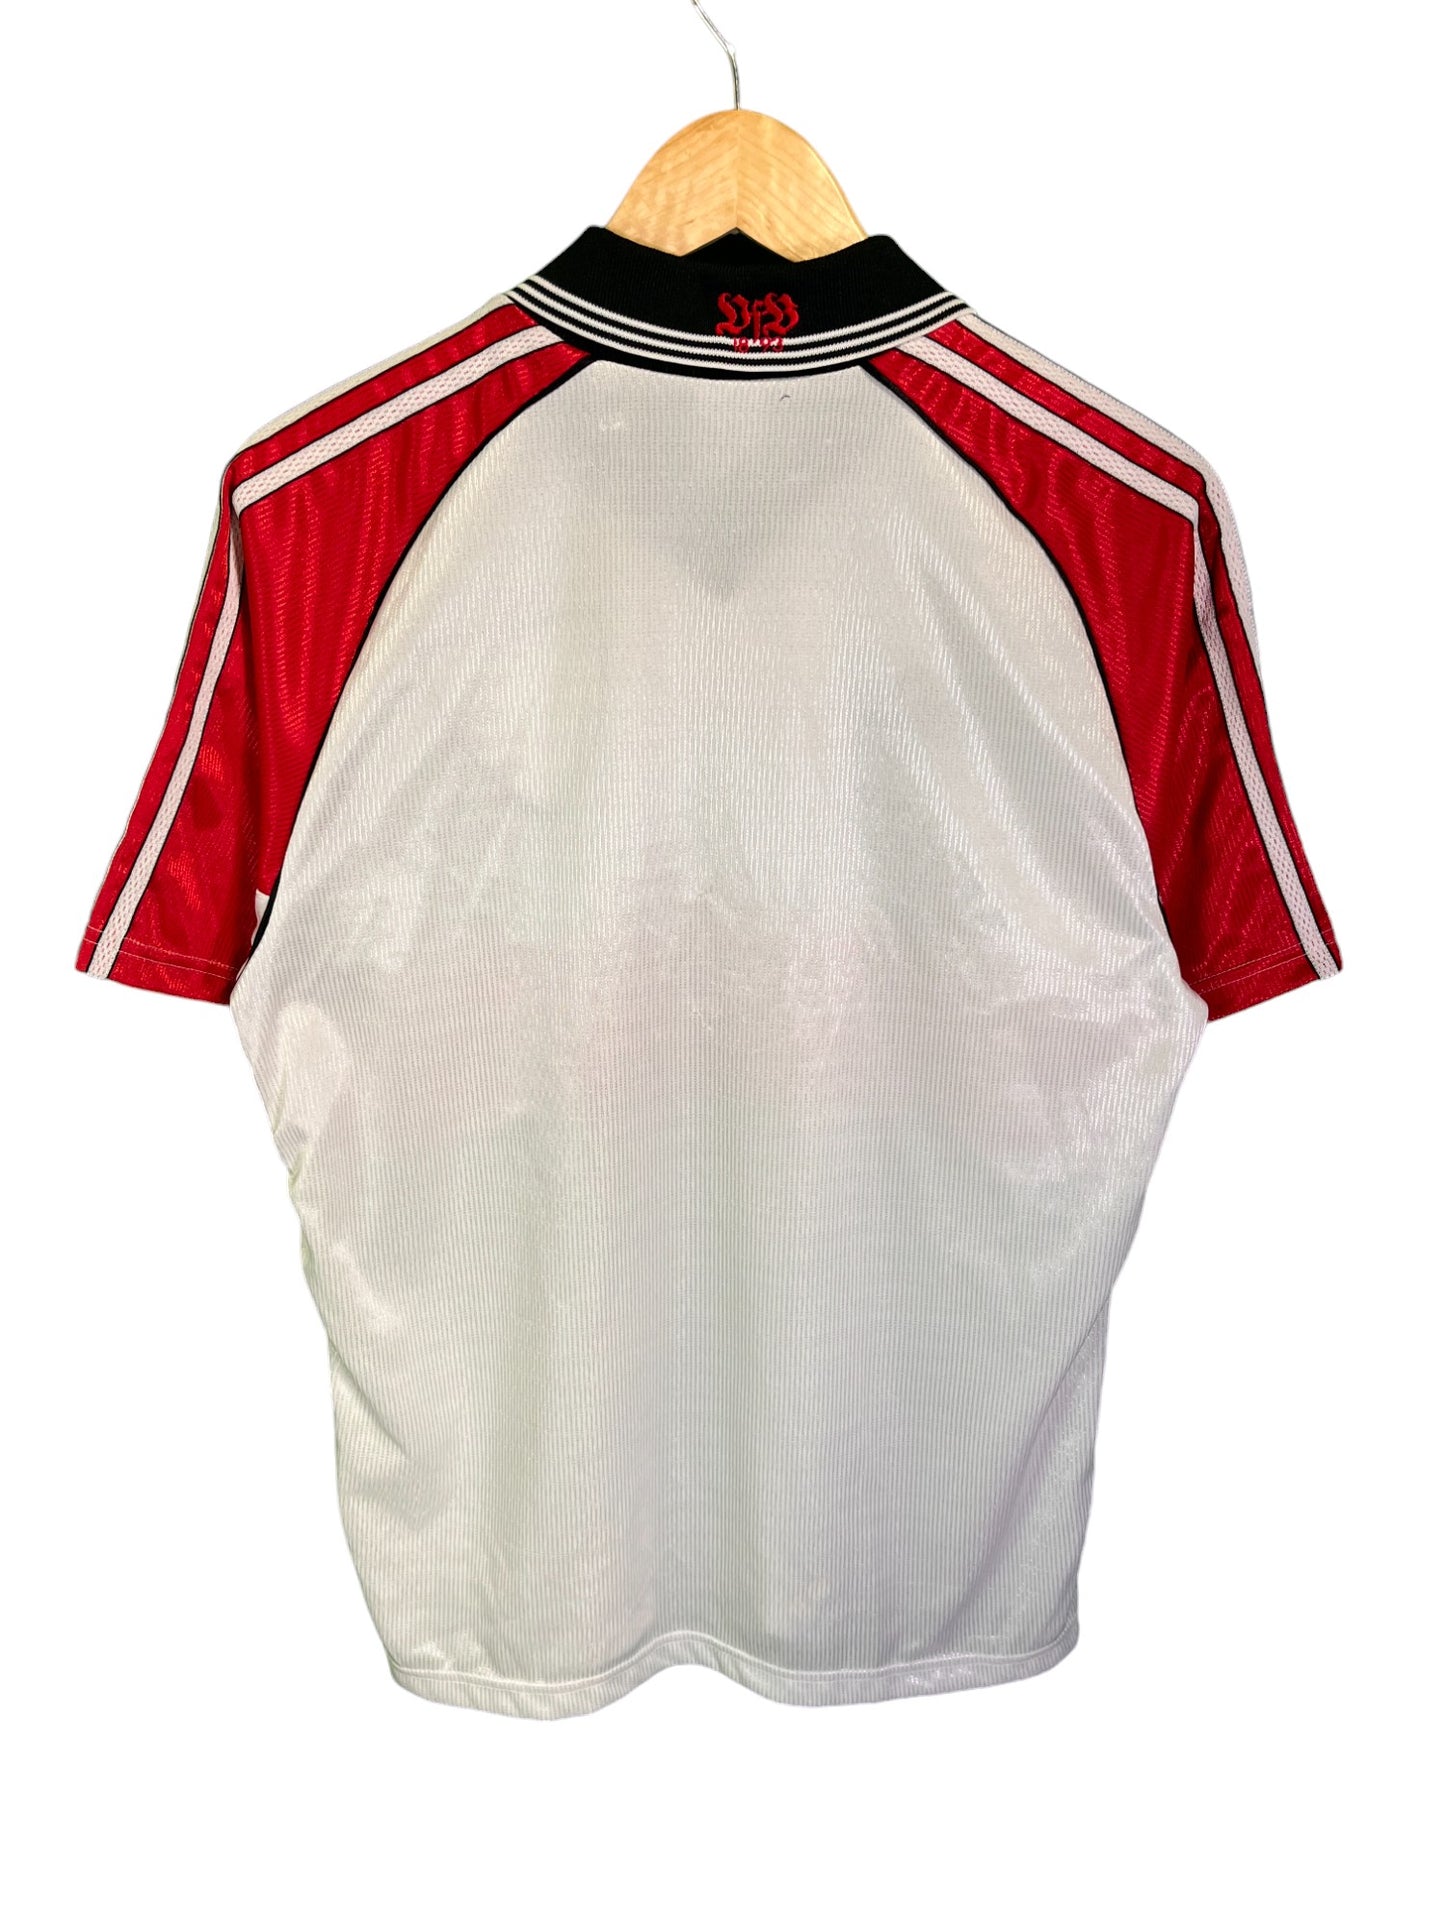 Vintage Adidas Bayern Munchen FC Soccer Football Jersey NWT Size Small